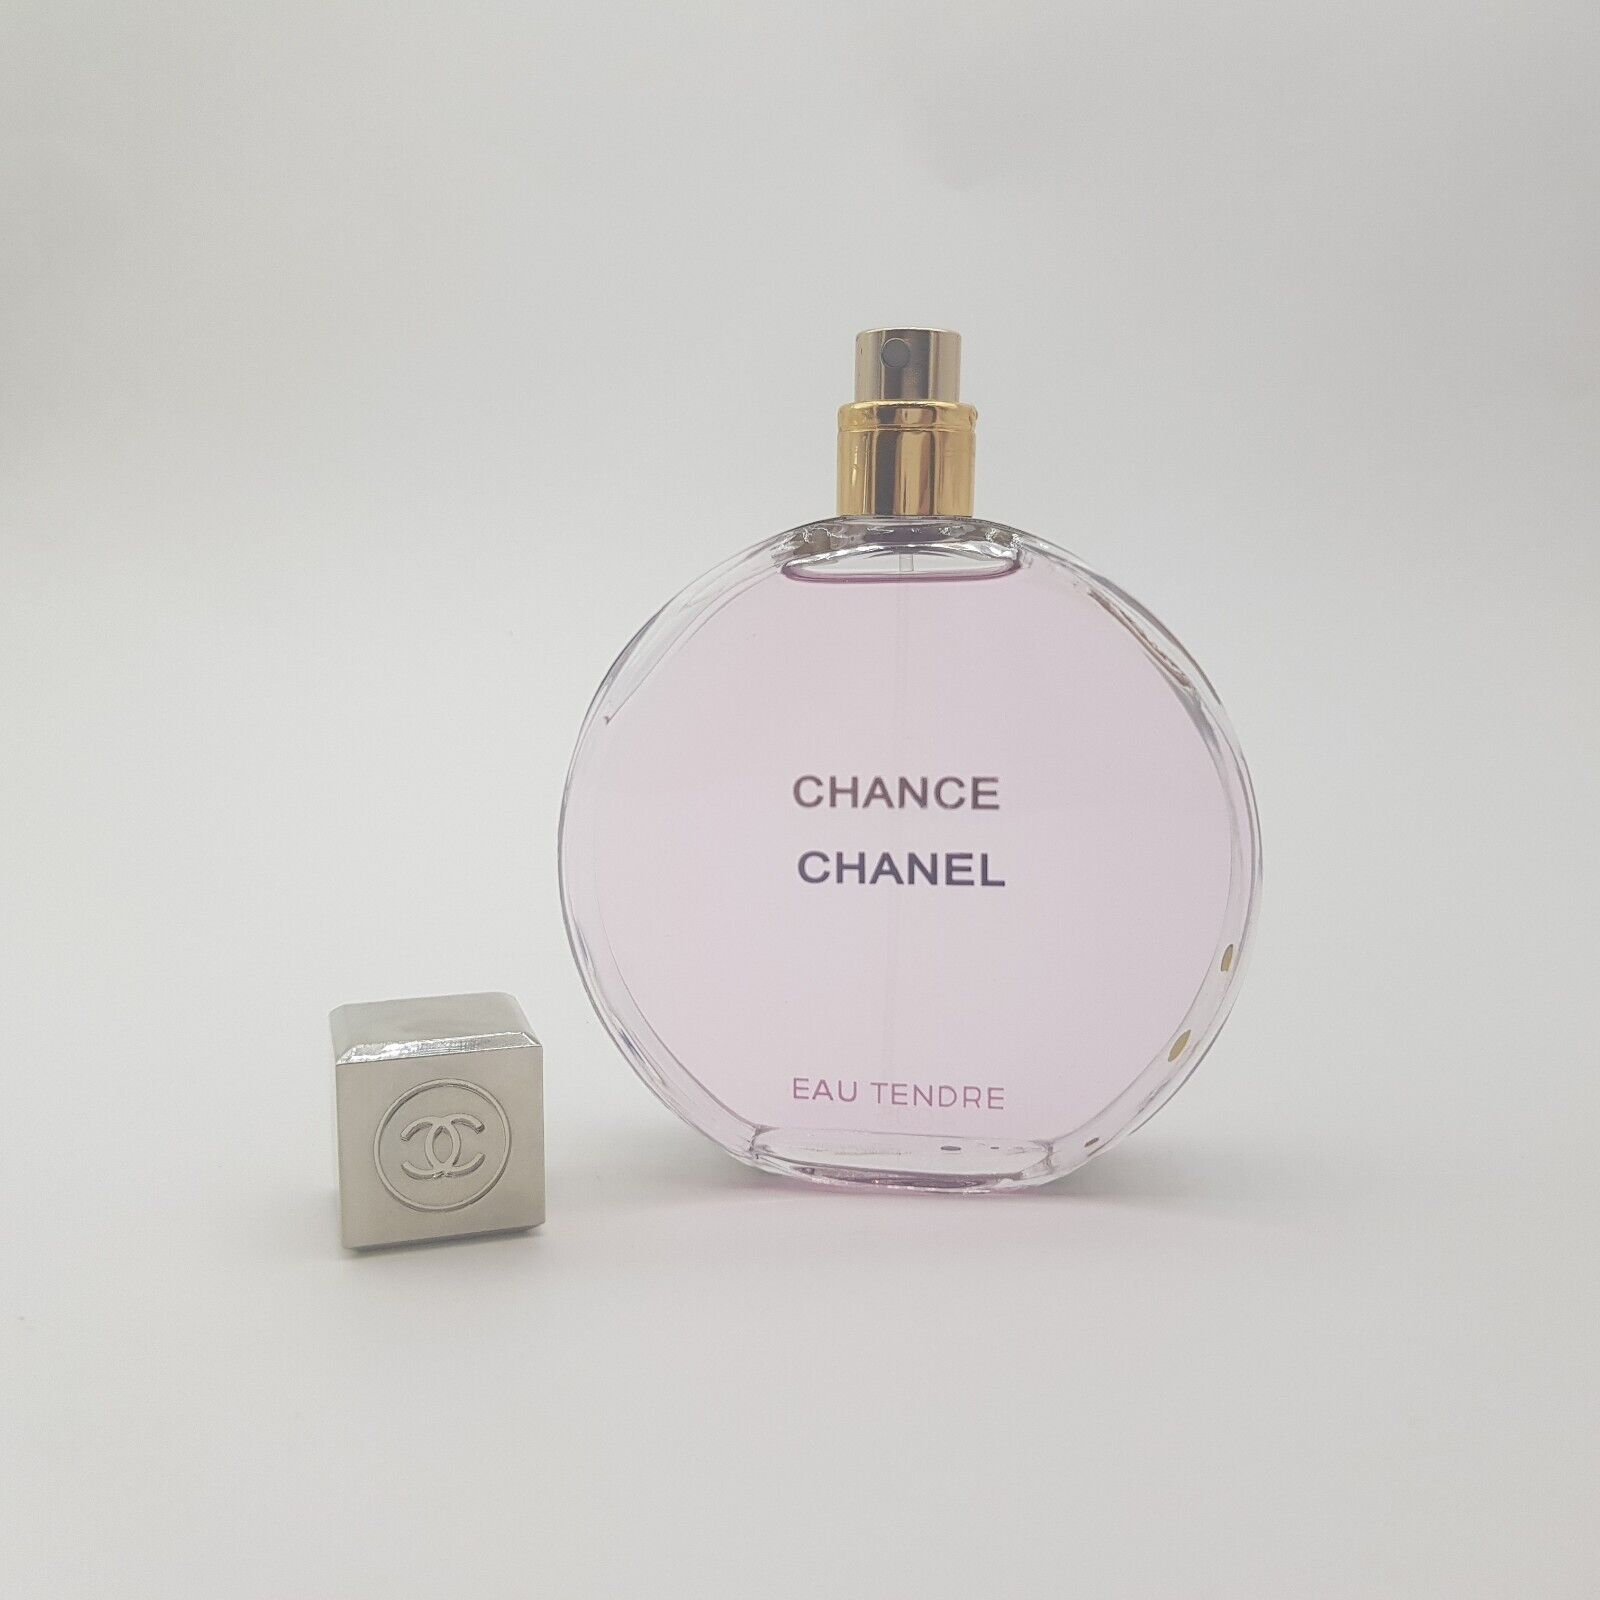 NEWChane.l Chance Eau Tendre EDP Eau de Parfume Spray 3.4 Oz 100 Ml (Sealed Box)